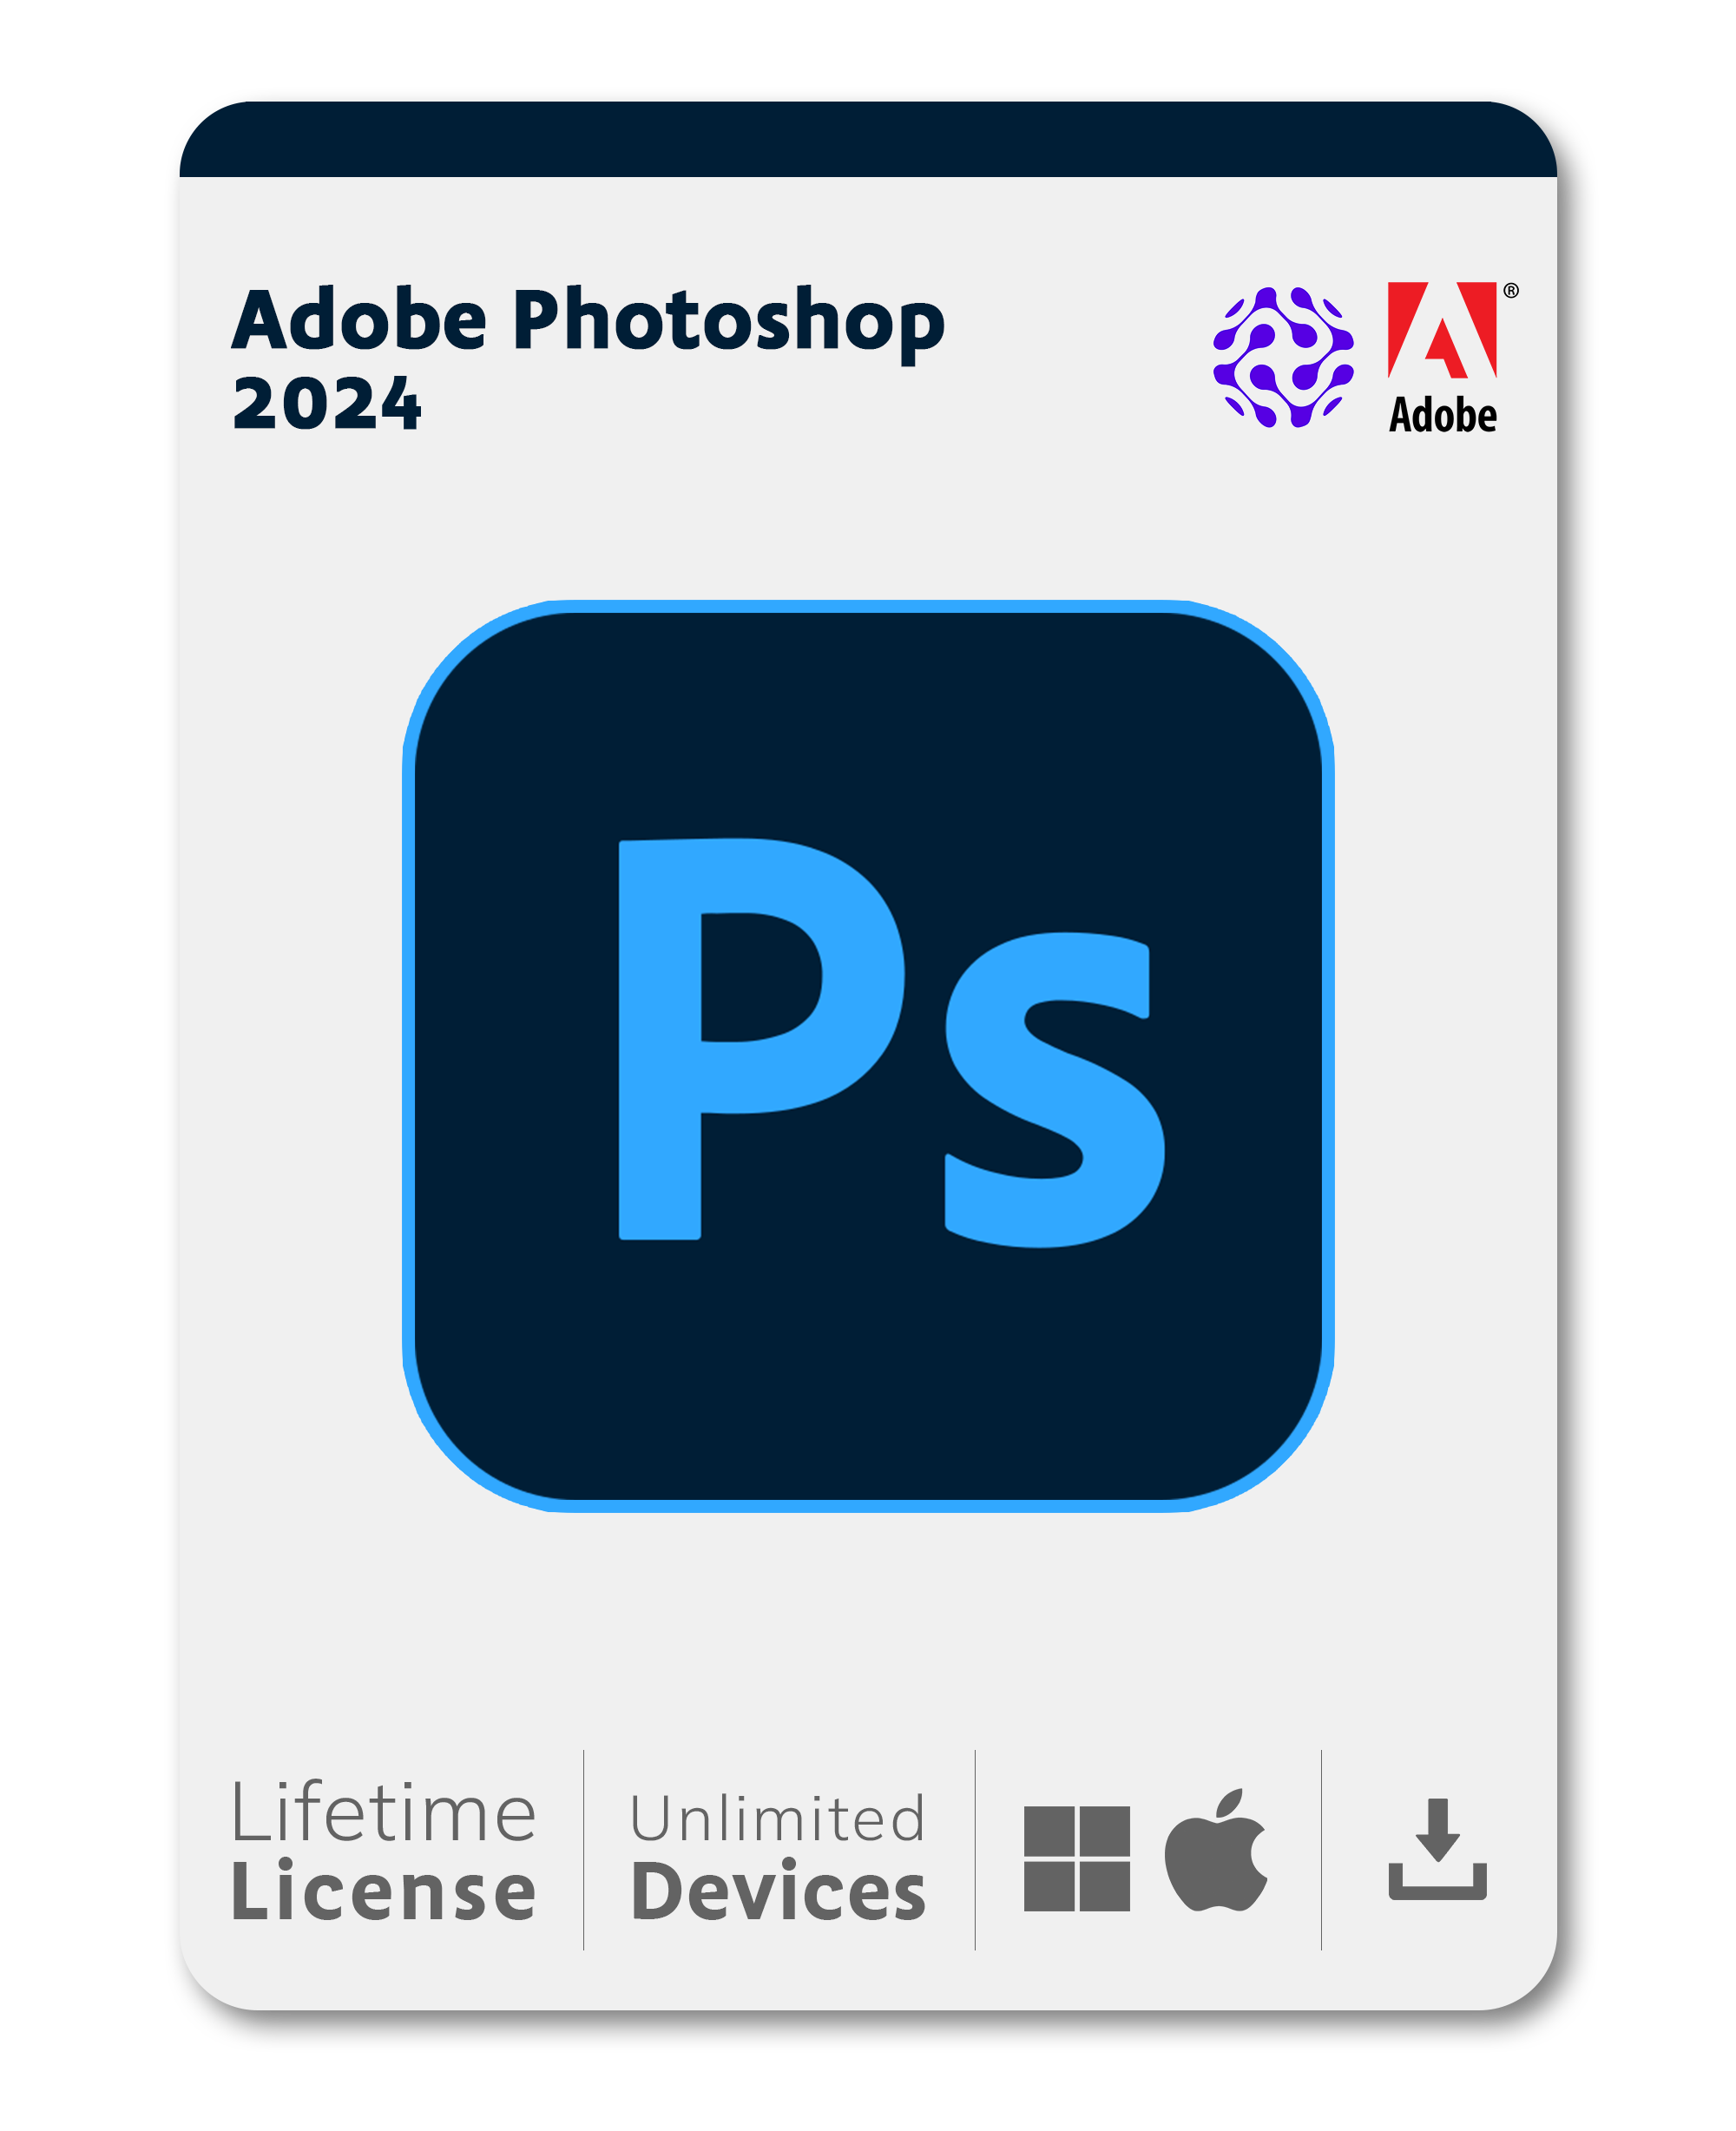 Adobe Photoshop 2024 